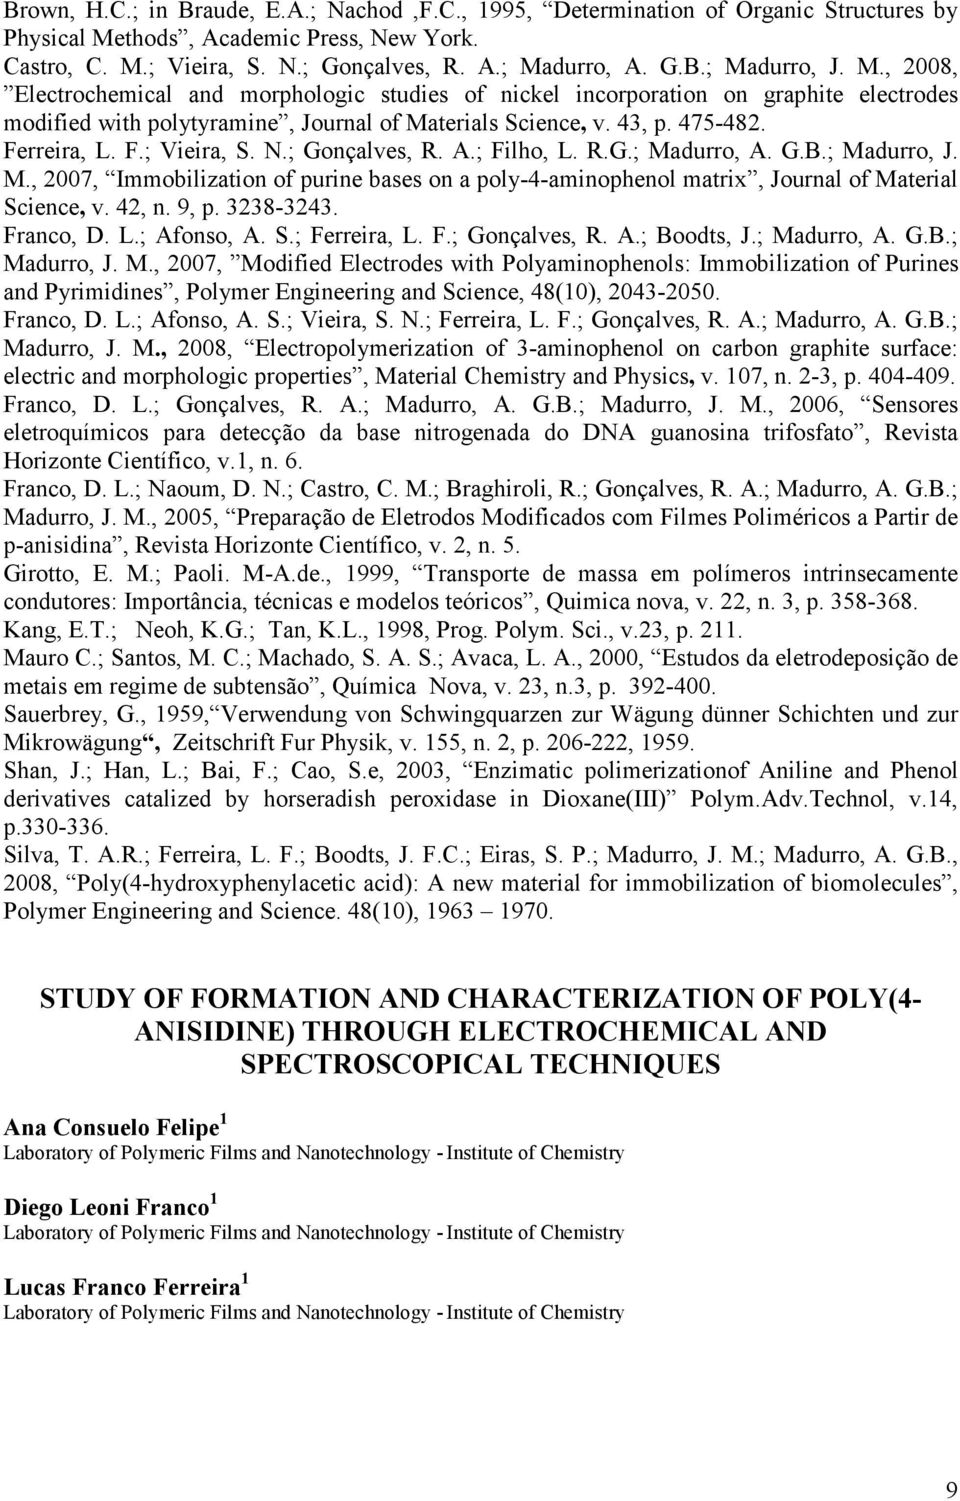 N.; Gonçalves, R. A.; Filho, L. R.G.; Madurro, A. G.B.; Madurro, J. M., 2007, Immobilization of purine bases on a poly-4-aminophenol matrix, Journal of Material Science, v. 42, n. 9, p. 3238-3243.